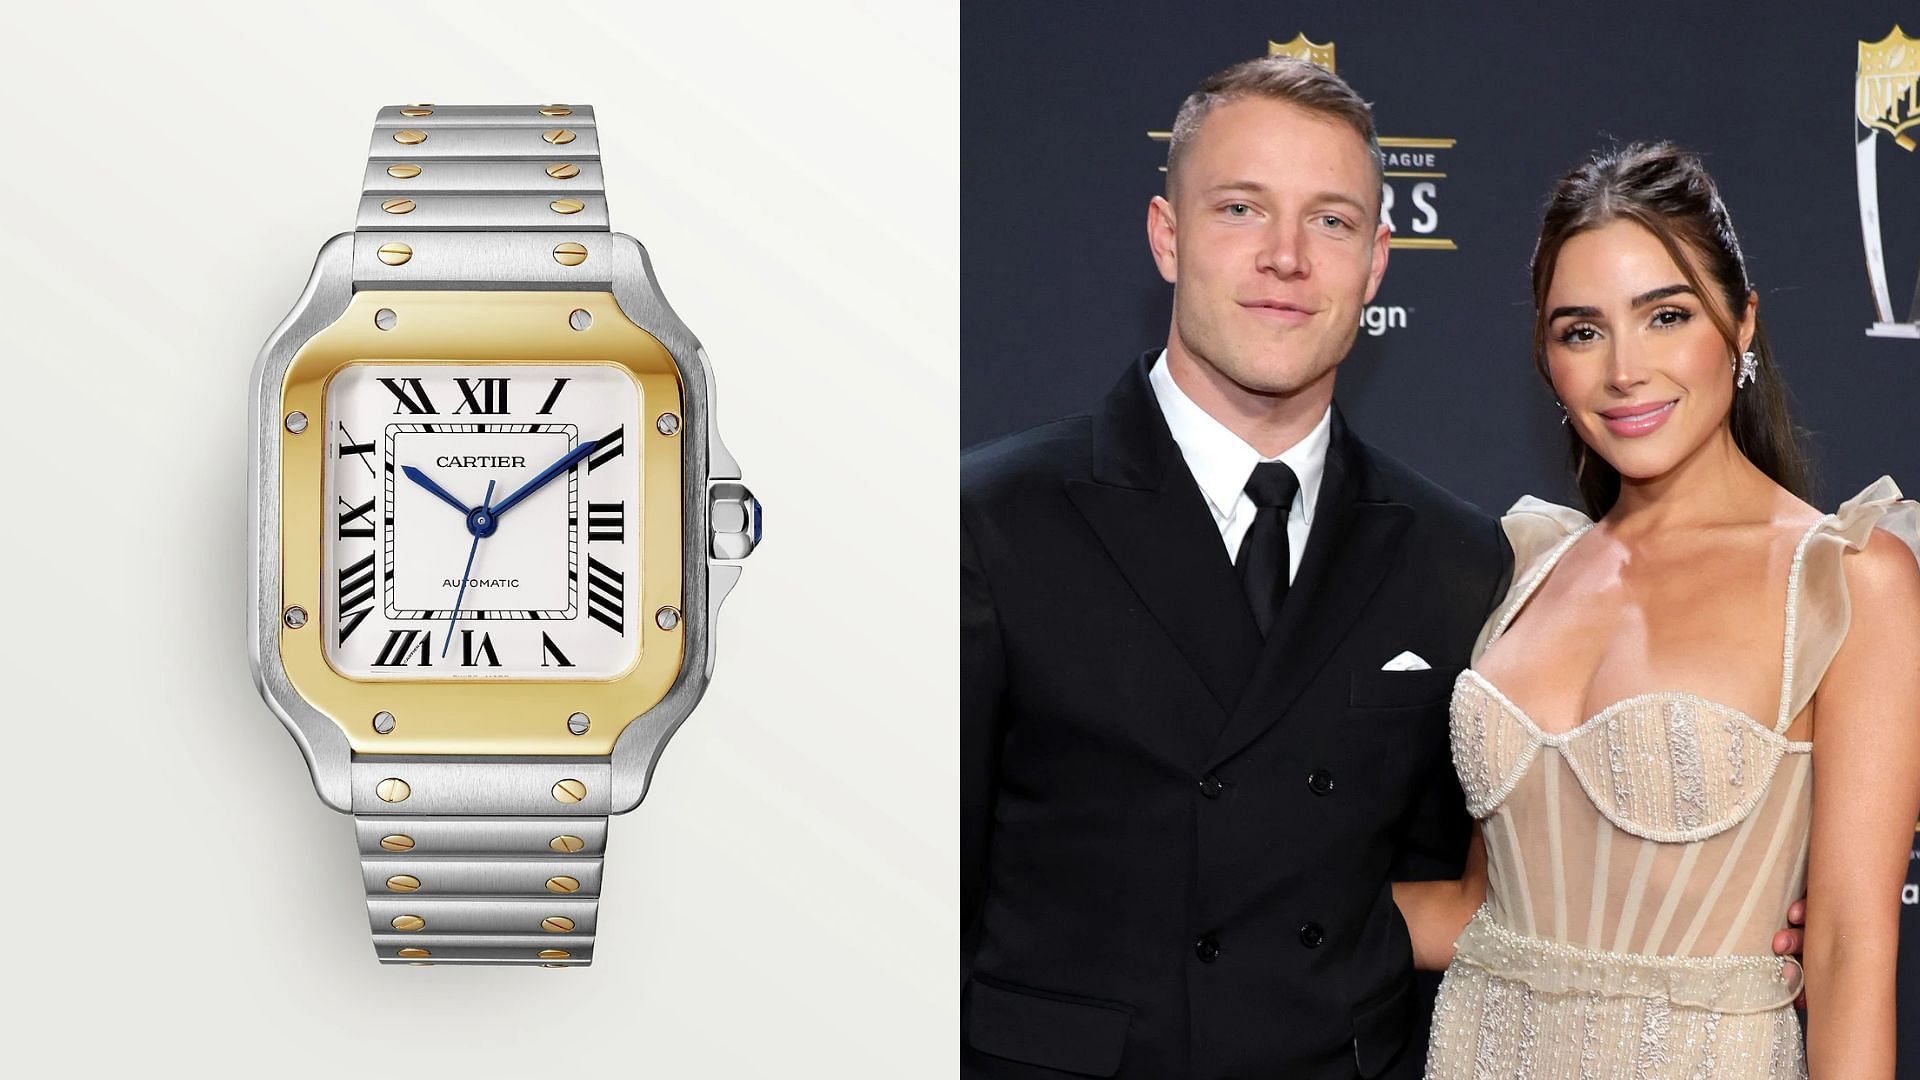 Olivia Culpo teases $12900 Cartier watch as souvenir for fianc&eacute; Christian McCaffrey